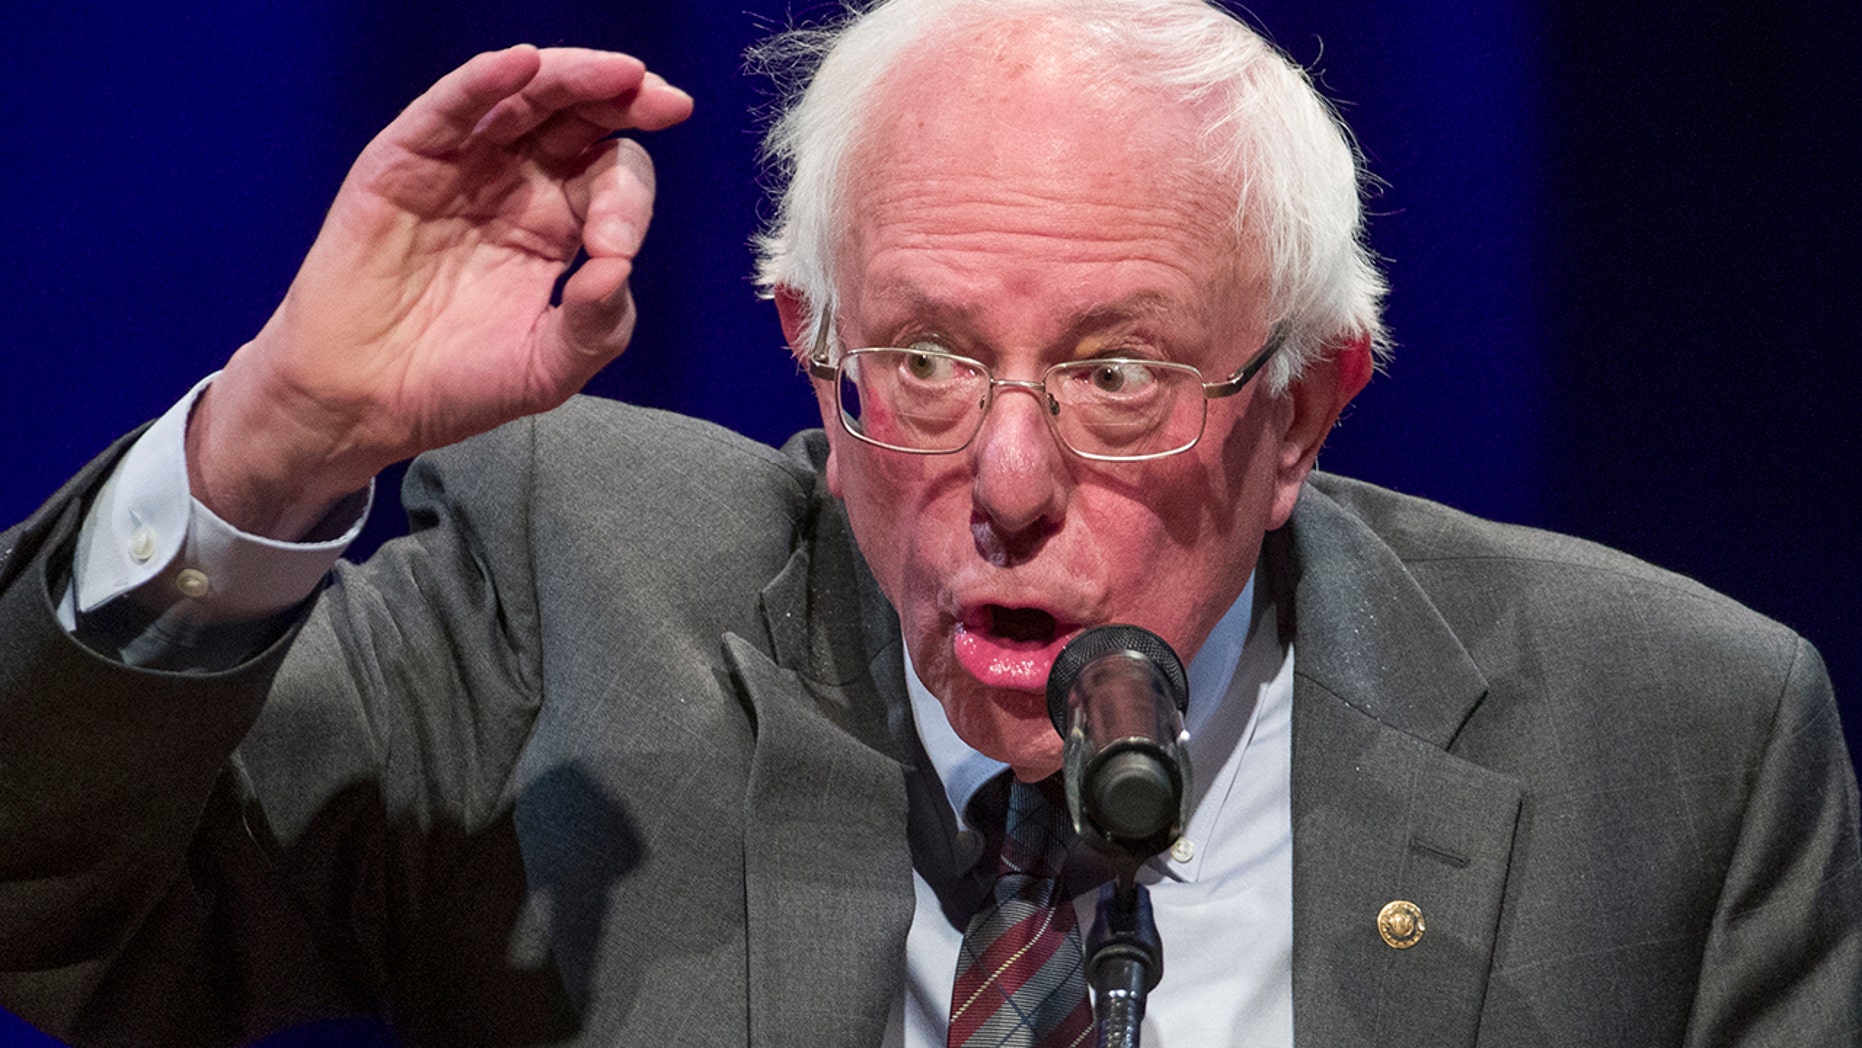 Bernie Sanders staffers seek to address ‘predatory culture’ during 2016 campaign: report